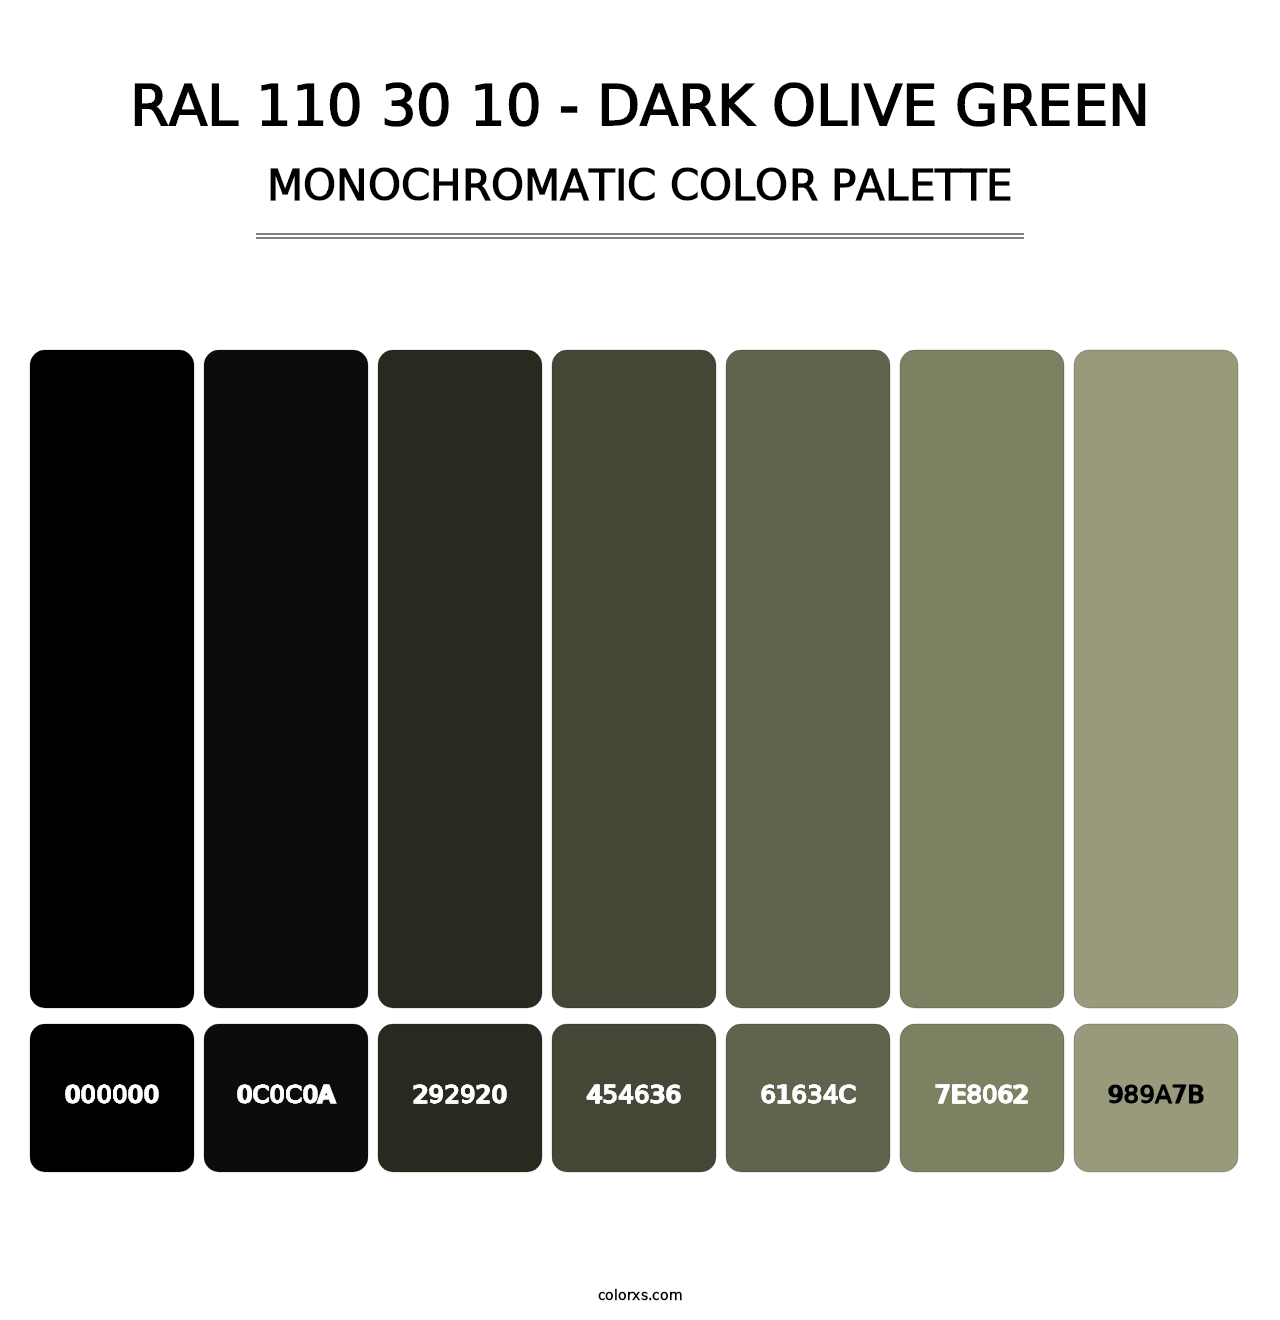 RAL 110 30 10 - Dark Olive Green - Monochromatic Color Palette